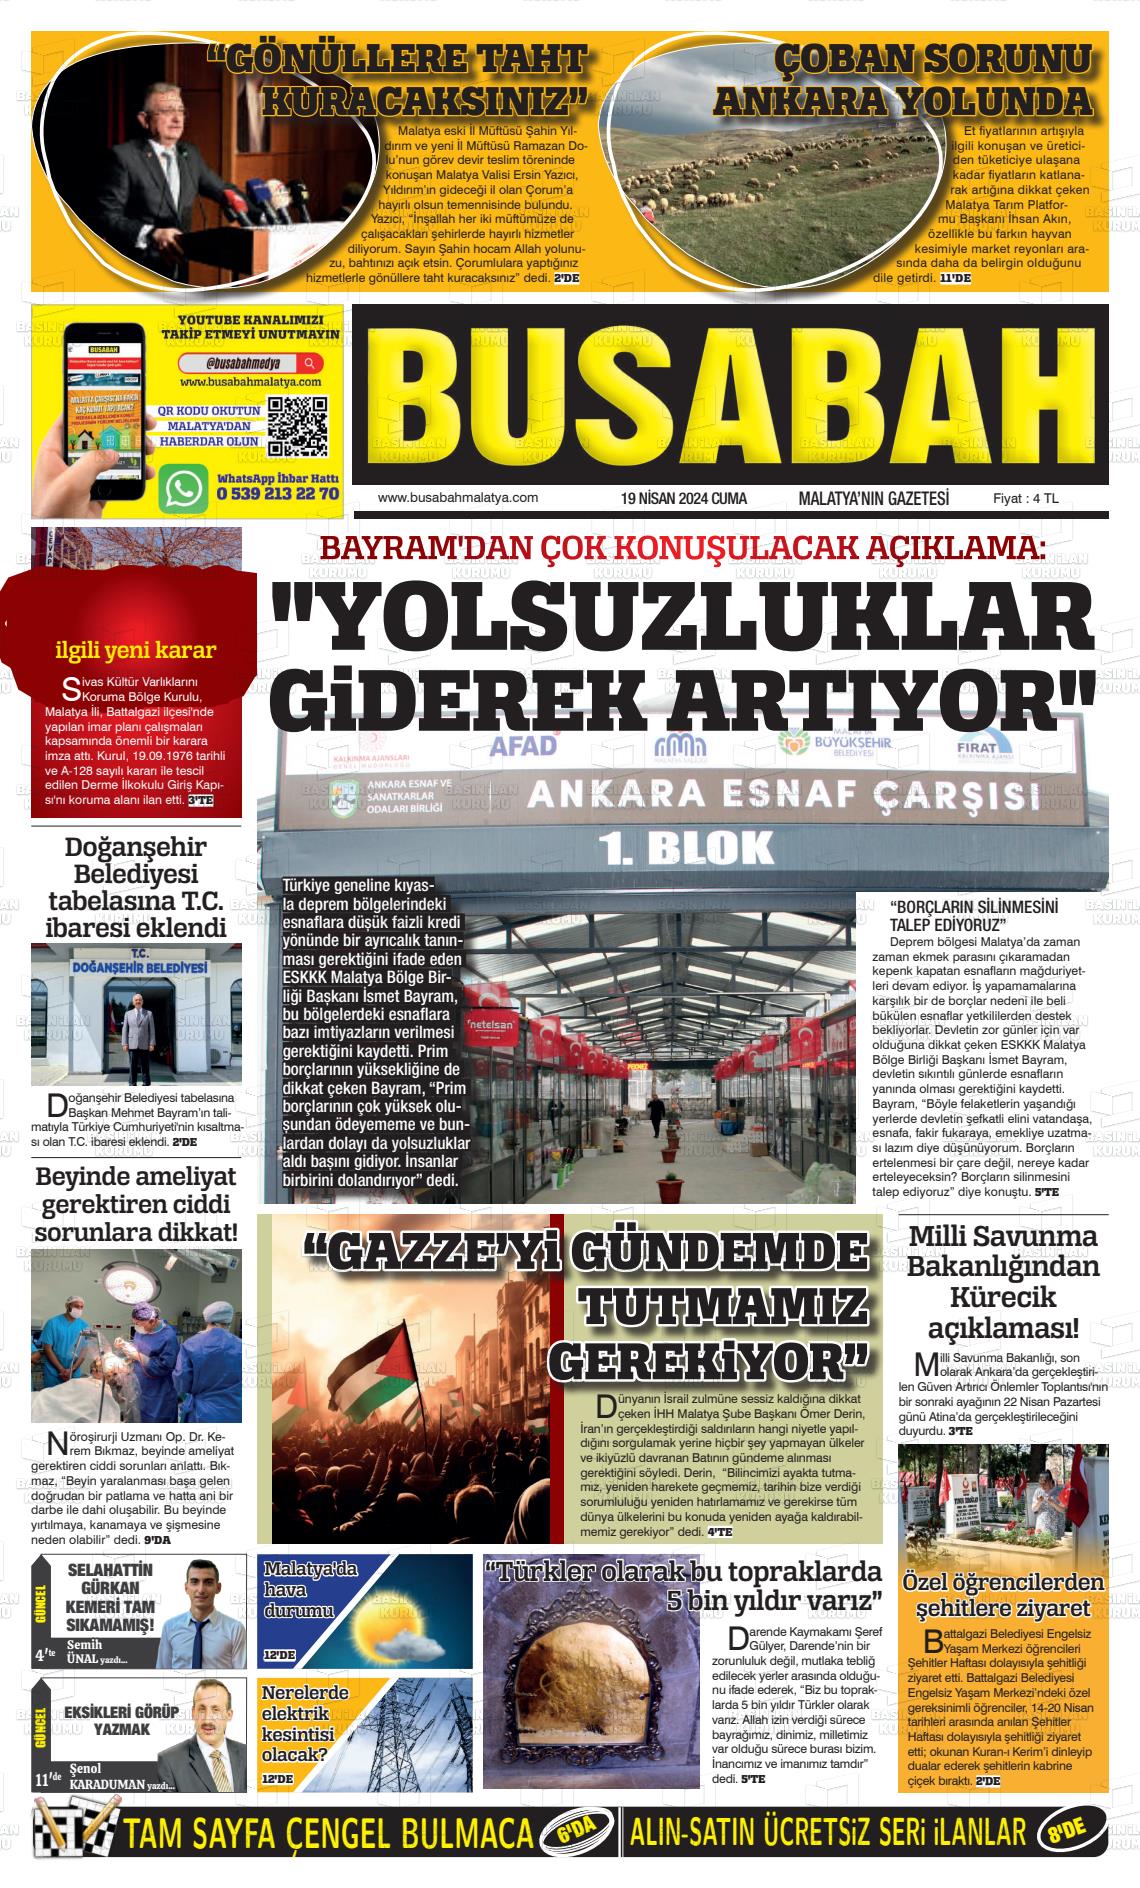 19 Nisan 2024 BUSABAH Malatya Gazete Manşeti